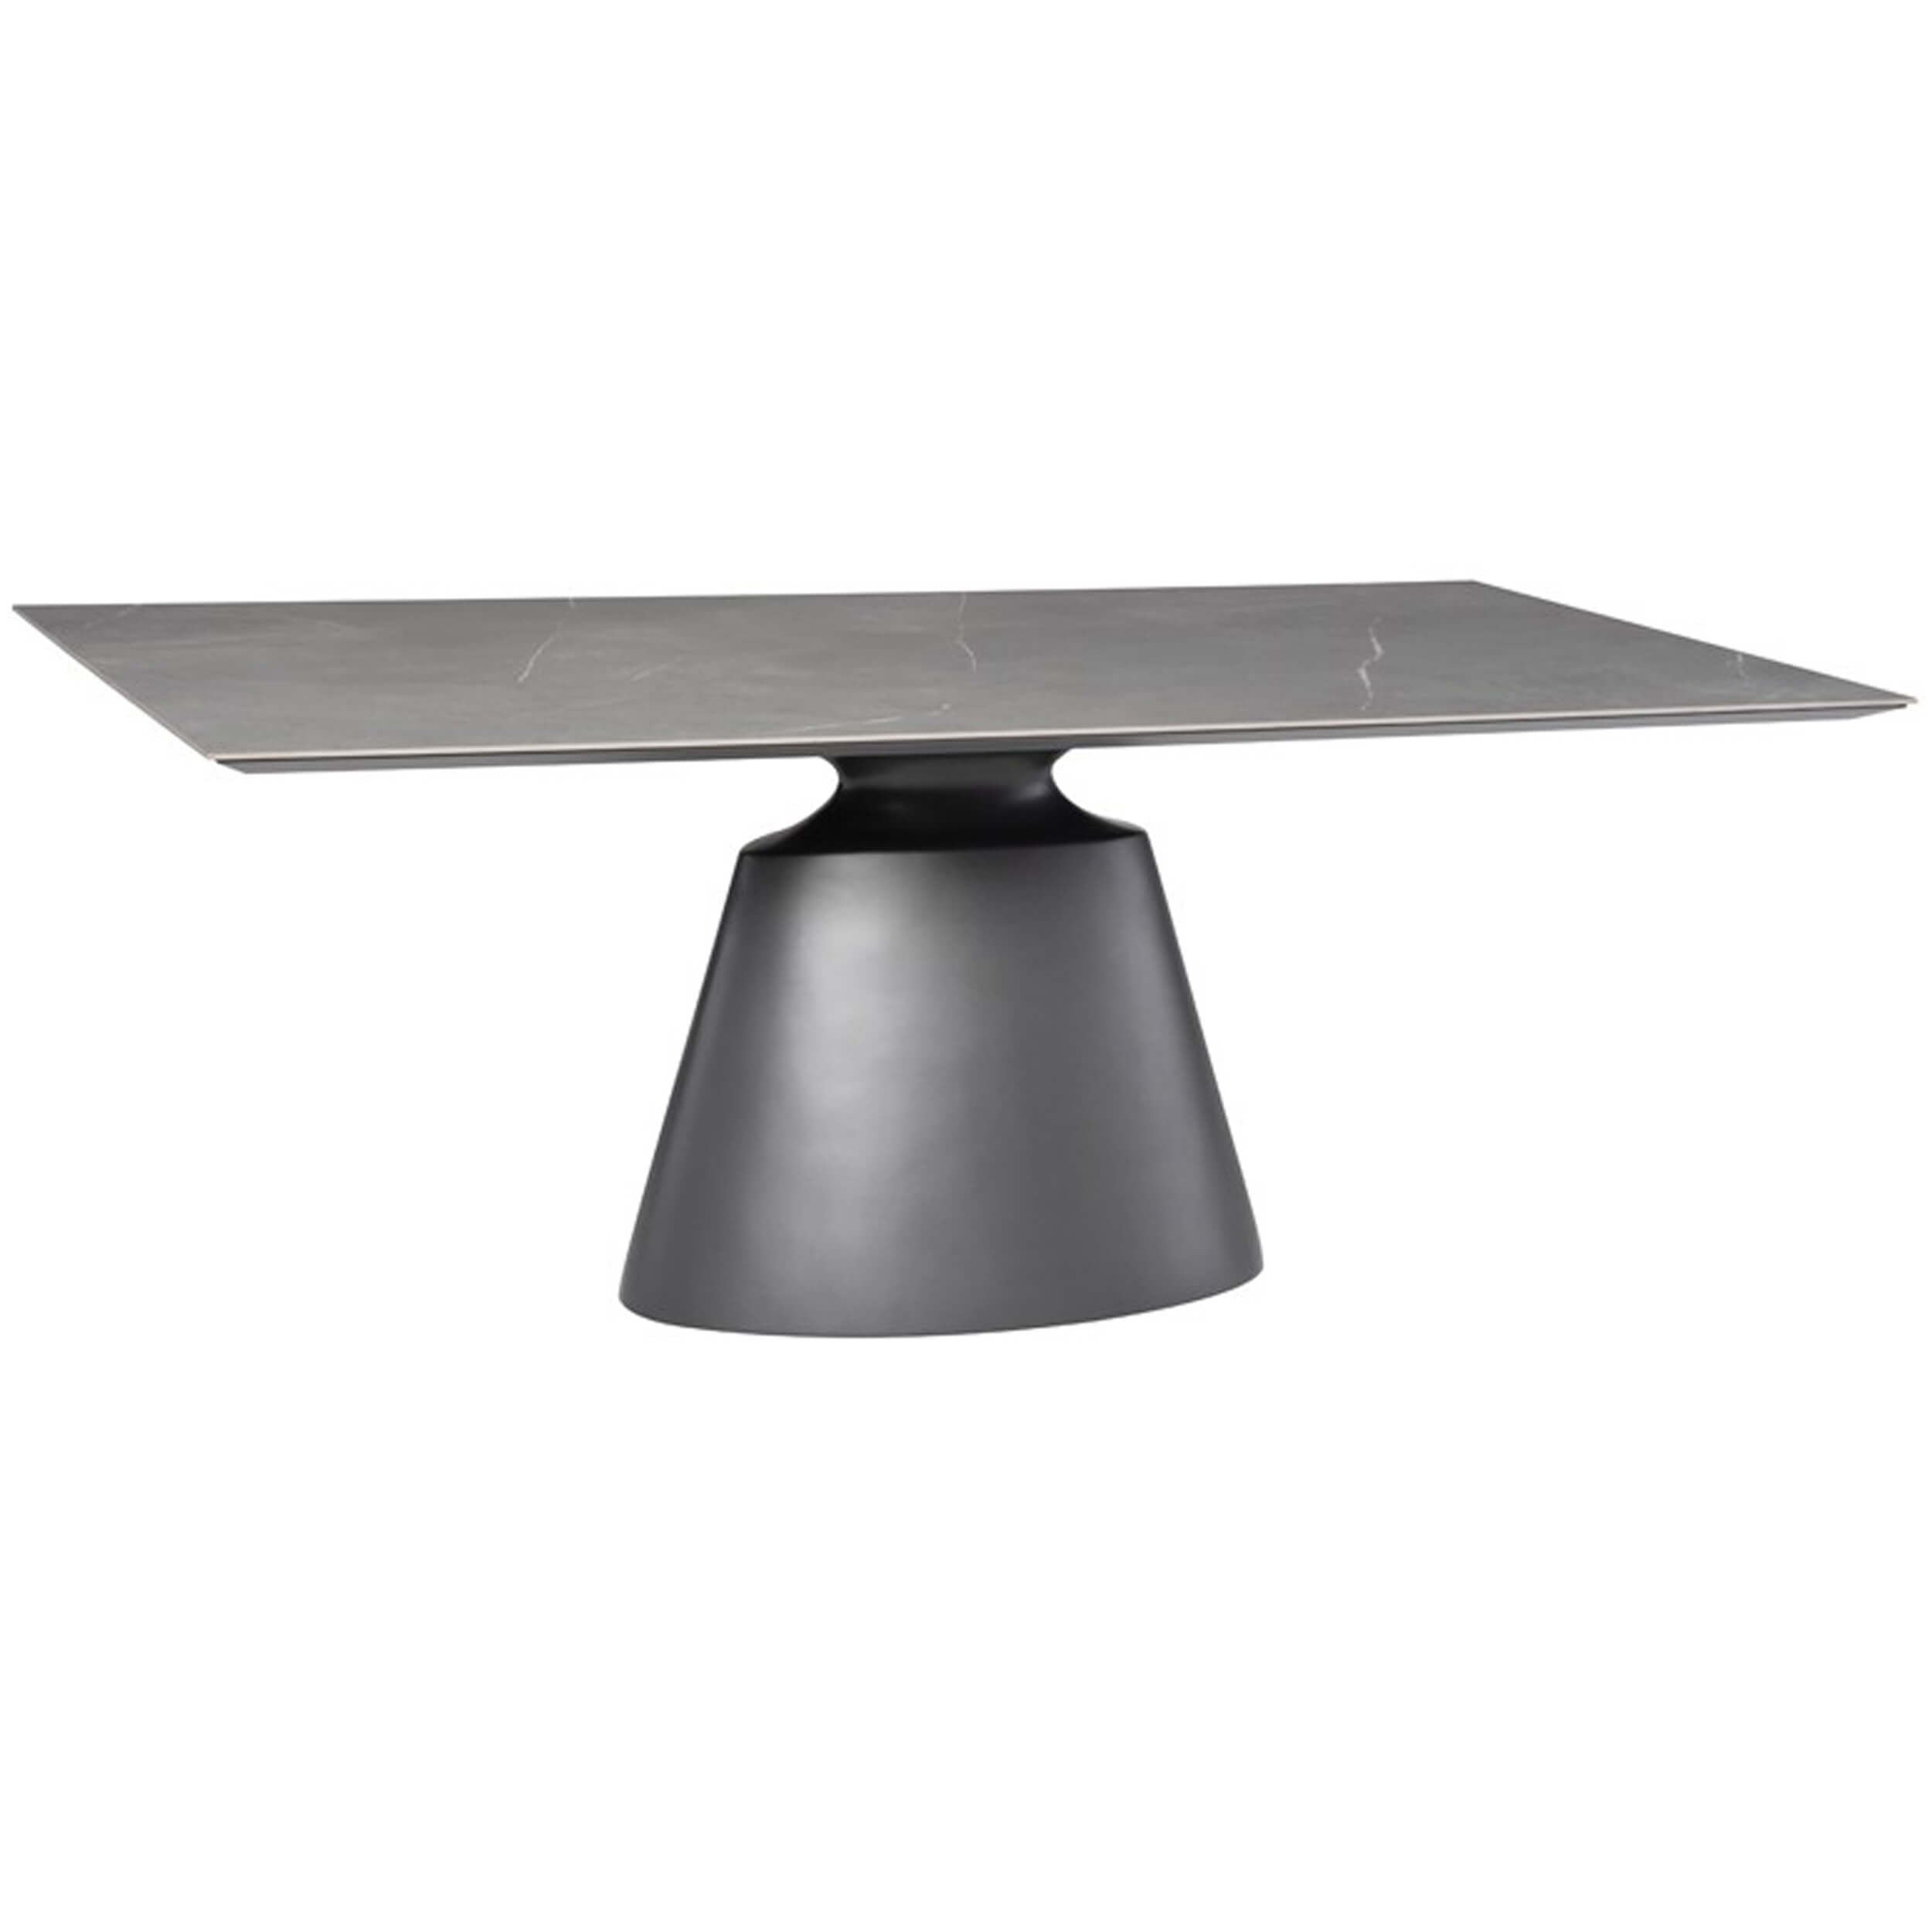 Image of Taji Rectangular Dining Table, Grey Ceramic/Titanium Base